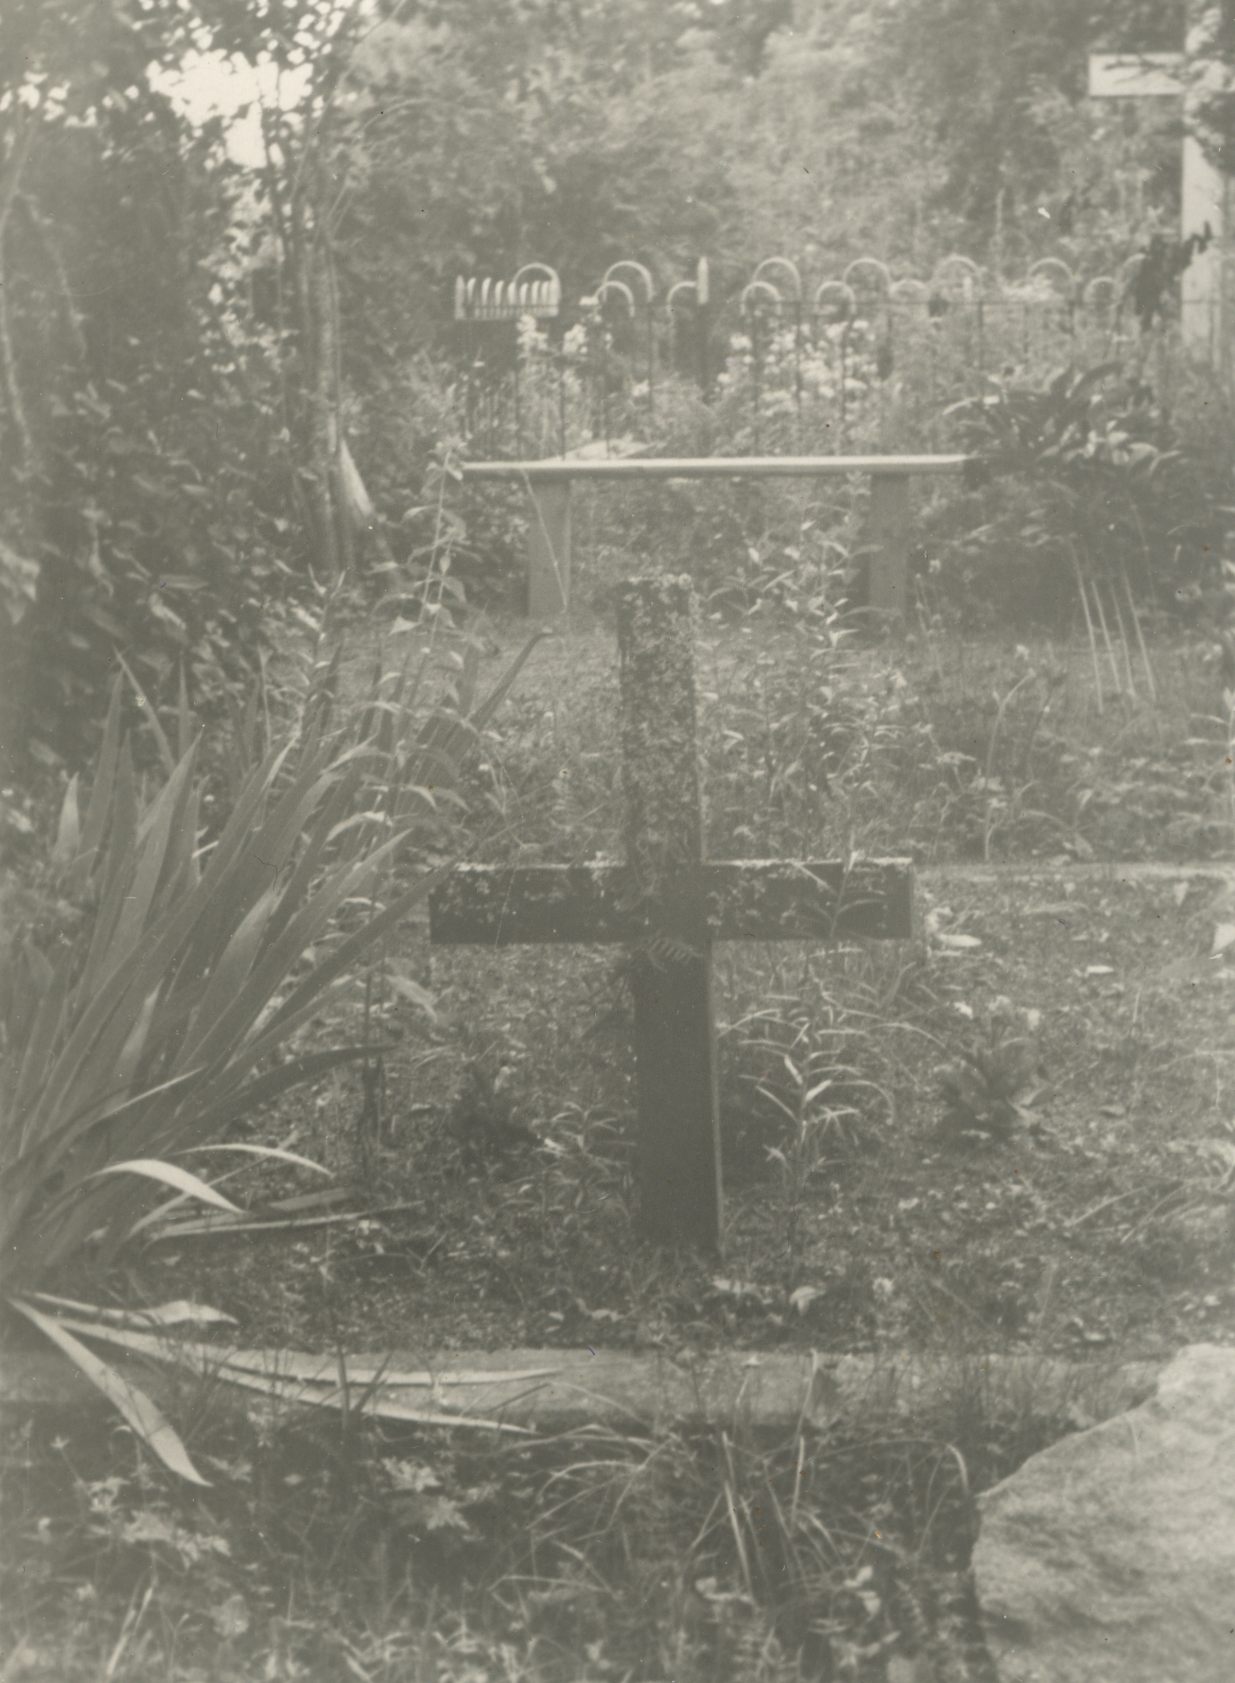 Hendrik Adamson's grave at Helme cemetery (before order).